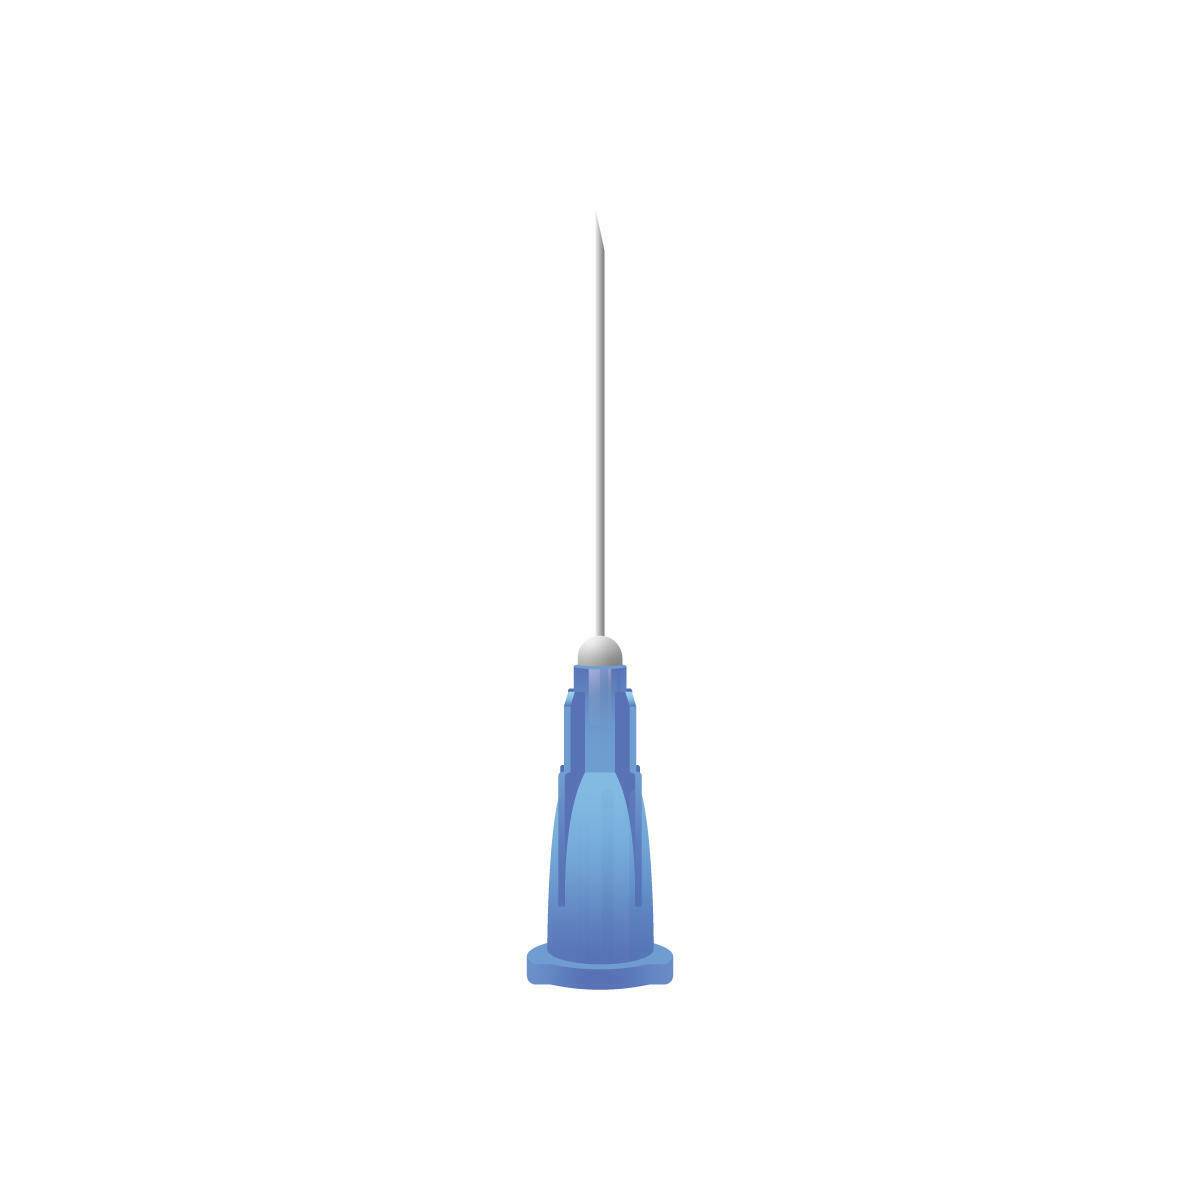 23g Blue 1 inch BD Microlance Needles